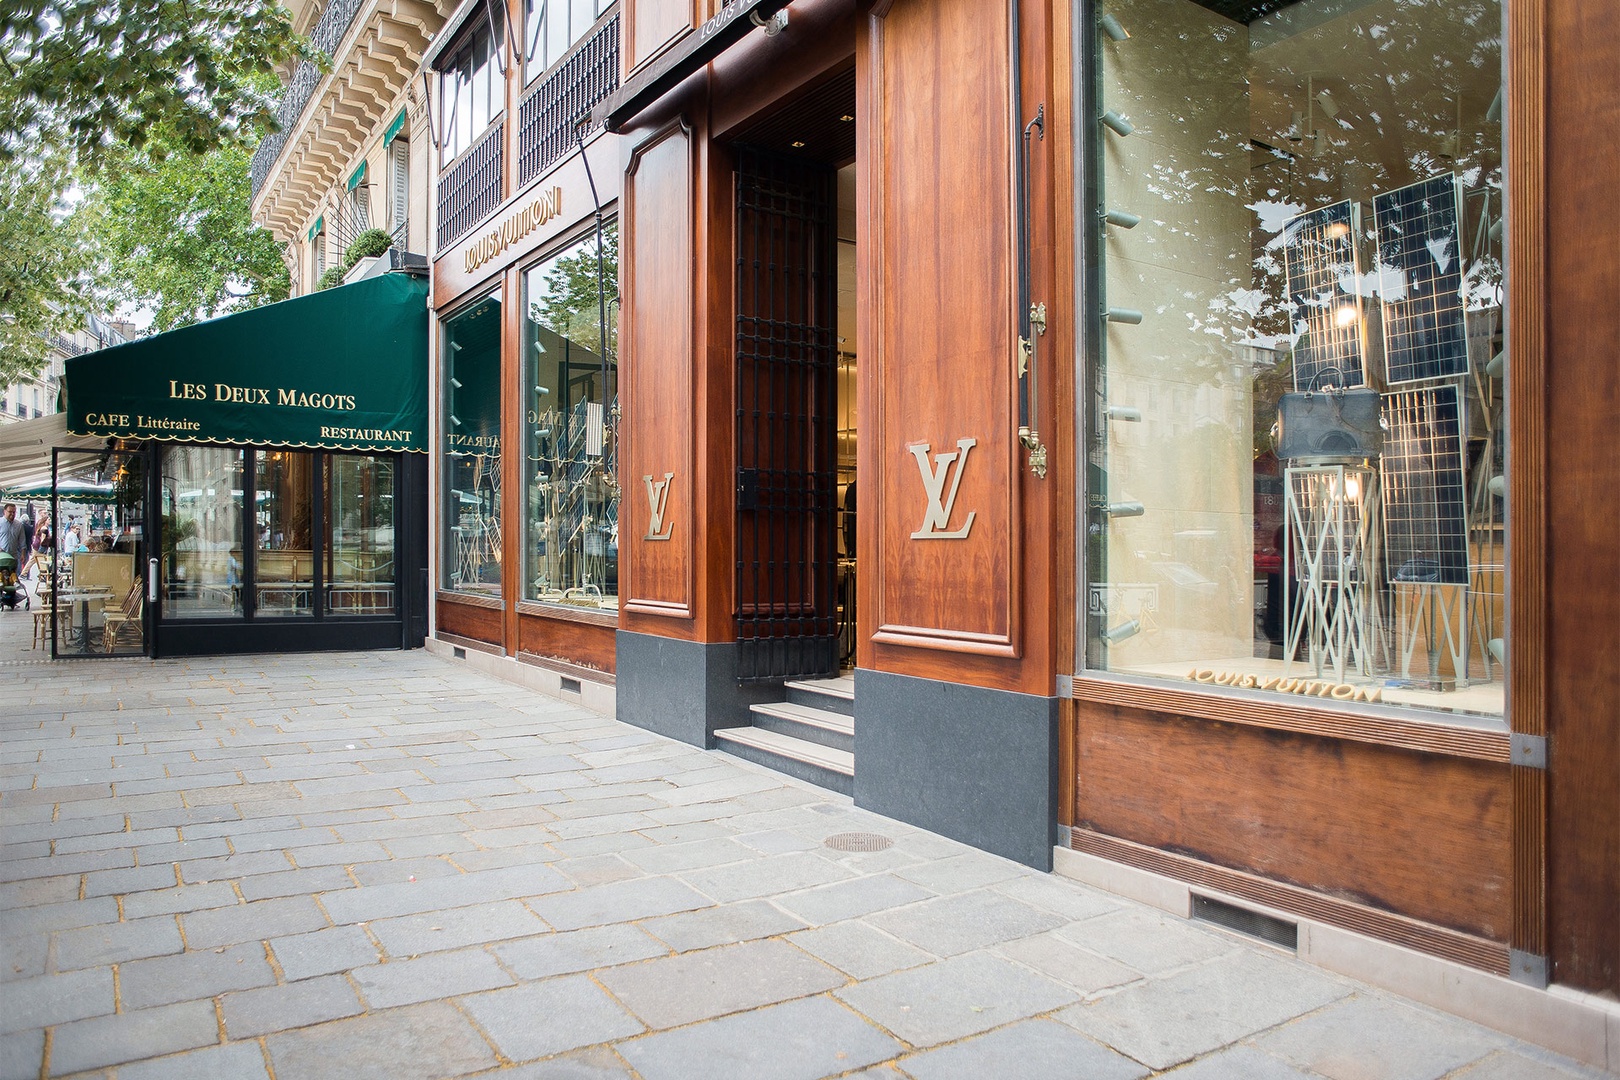 Shop in style in the chic Saint-Germain neighborhood